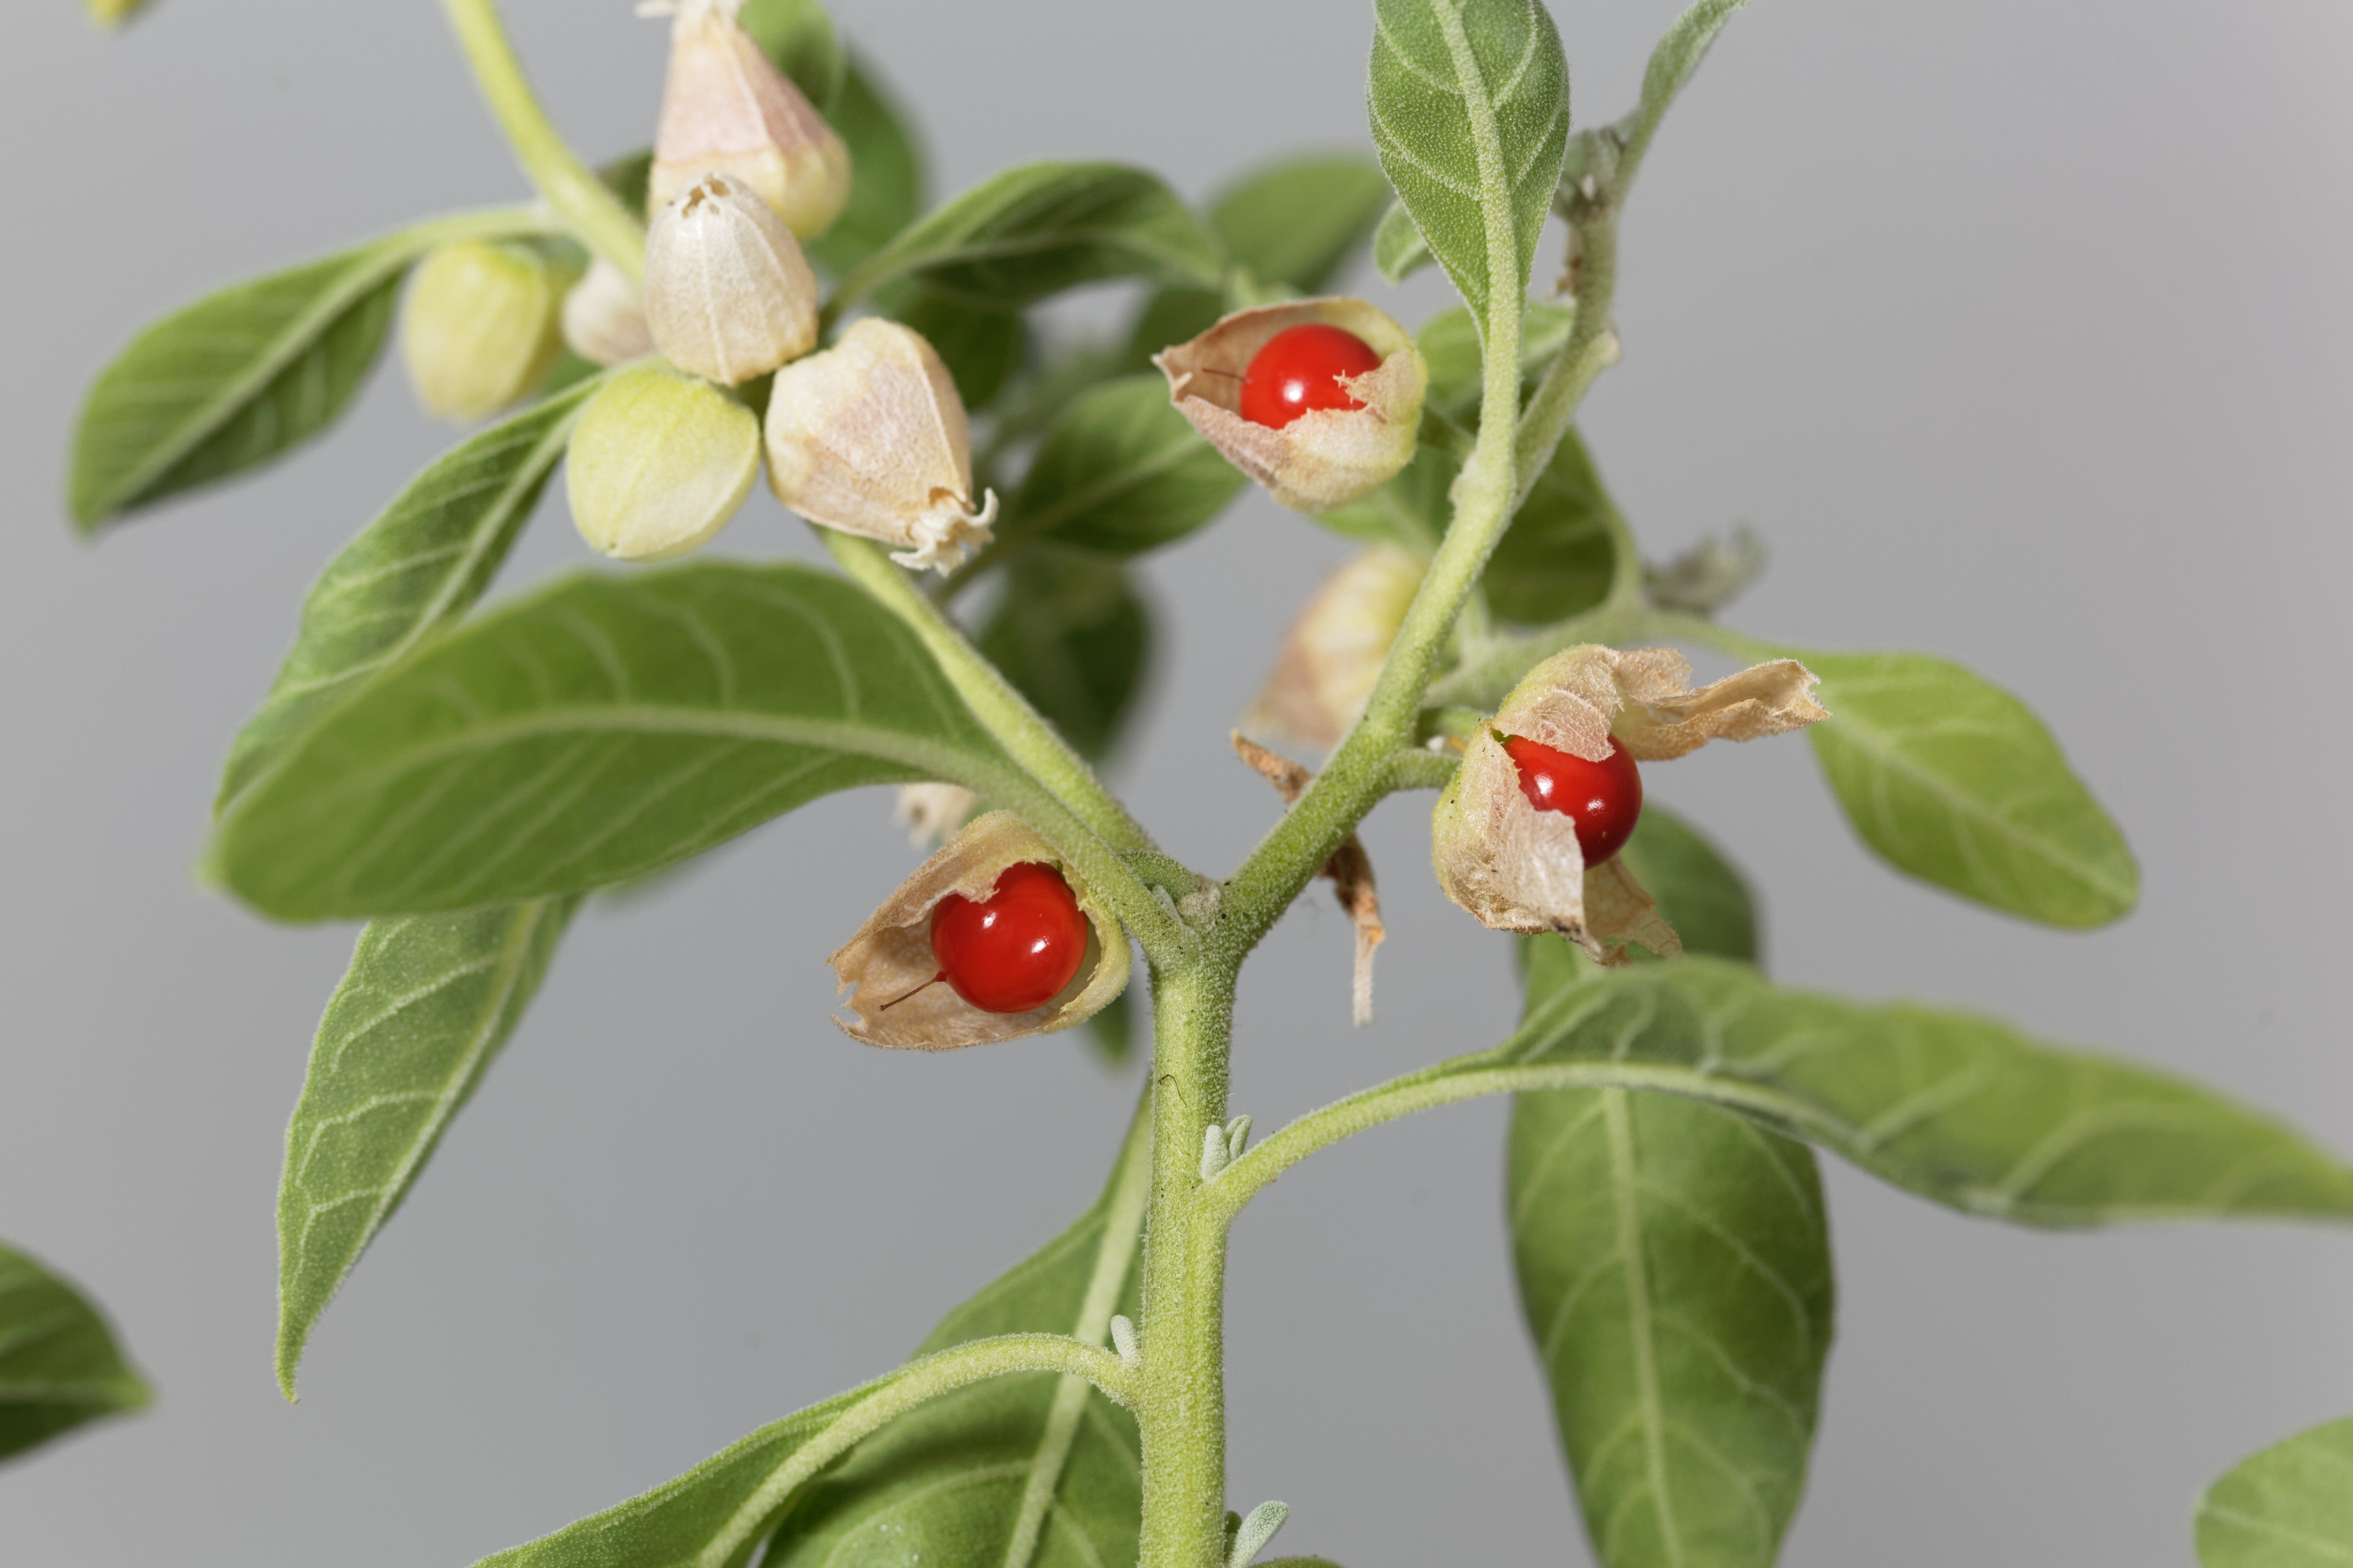 Ashwagandha plant with berries